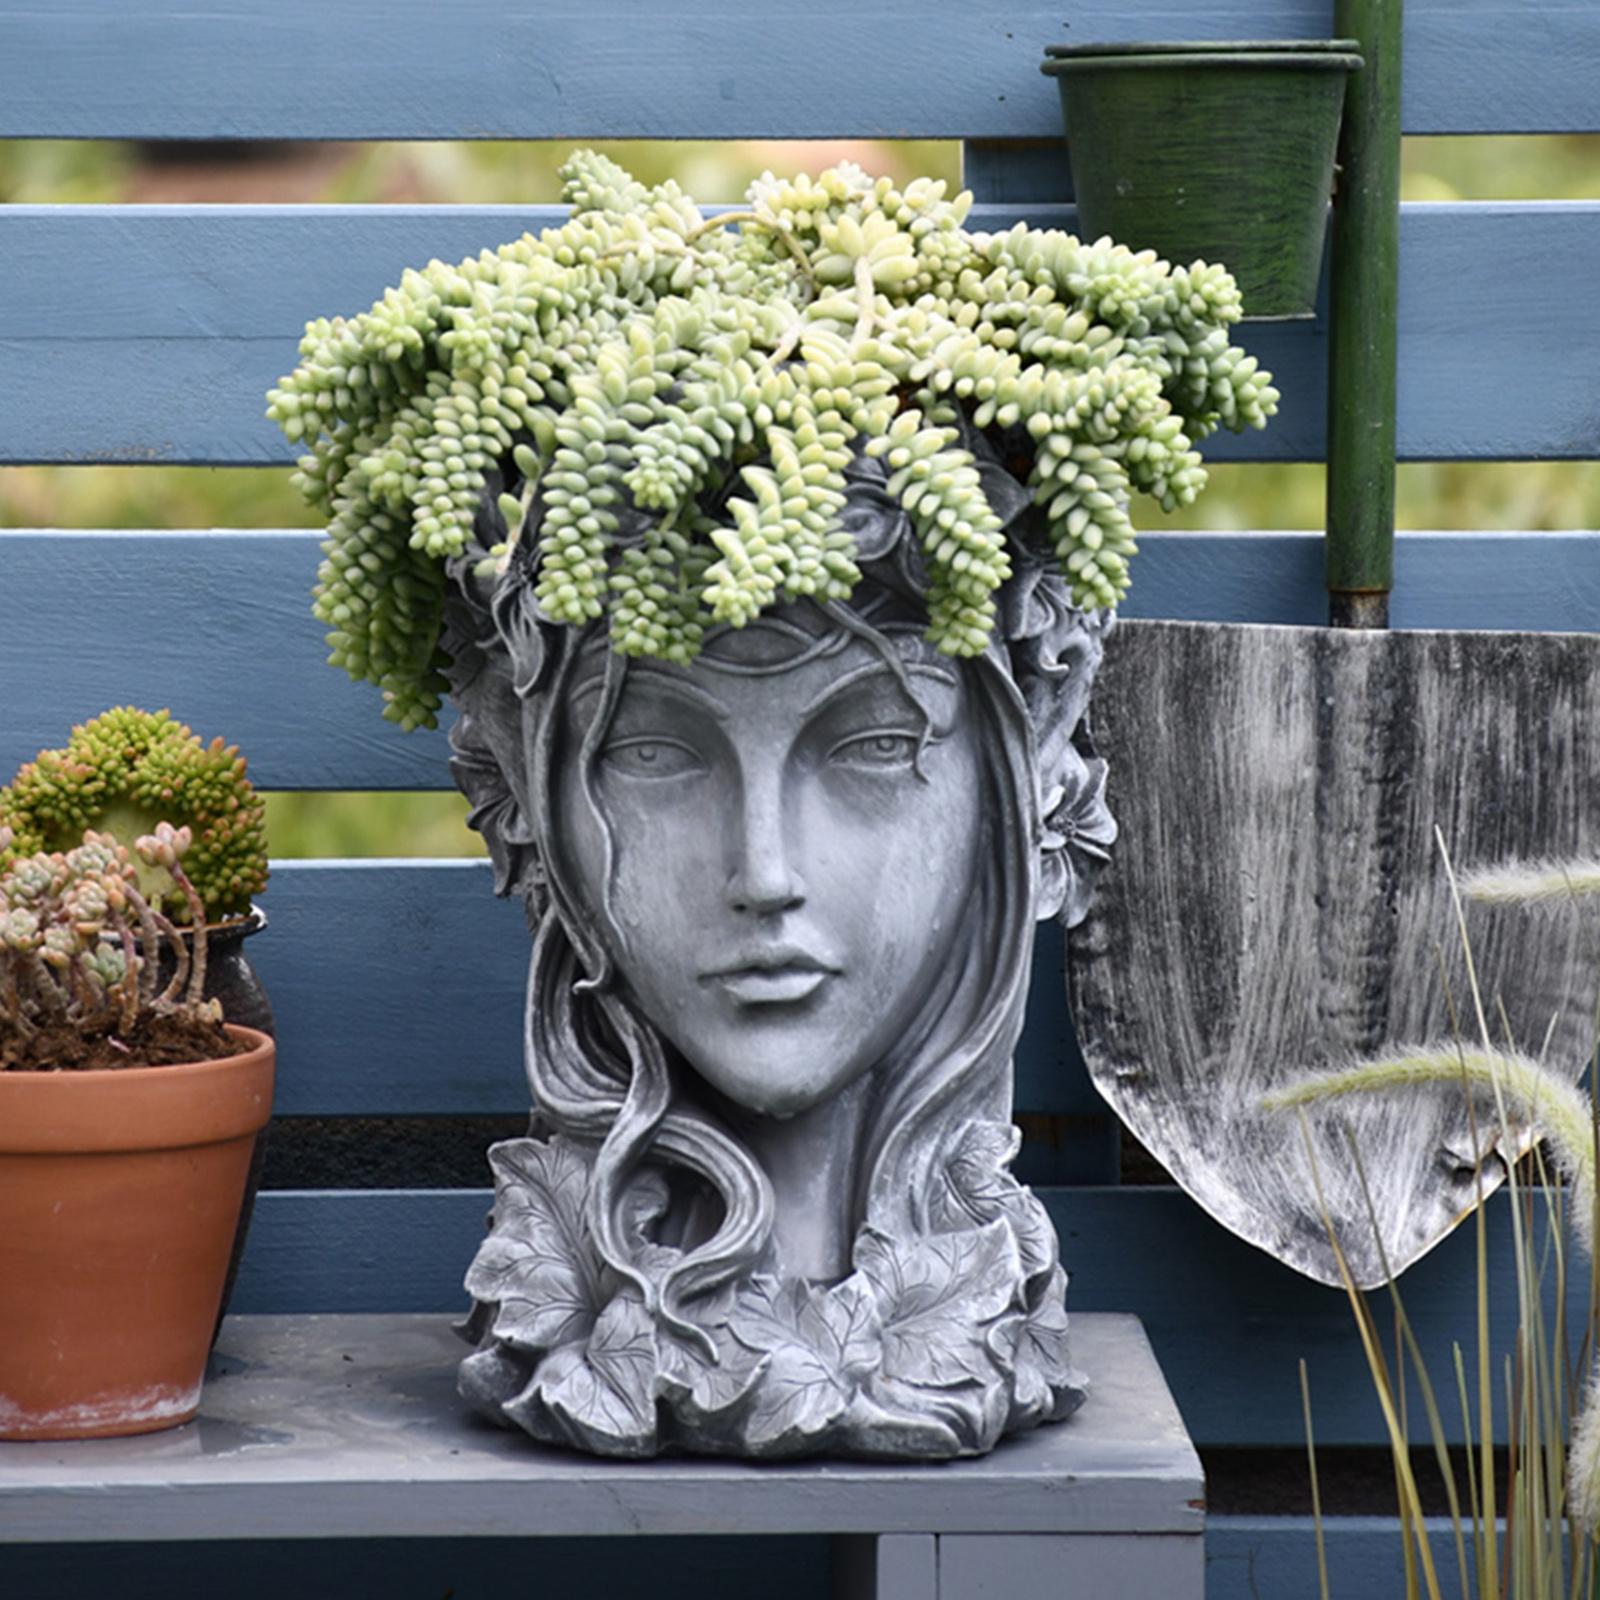 Resin Goddess Head Planter Flower Pot Beauty Face Figurine Ornament Decorative Plants Container Home Garden Patio Yard Decoration